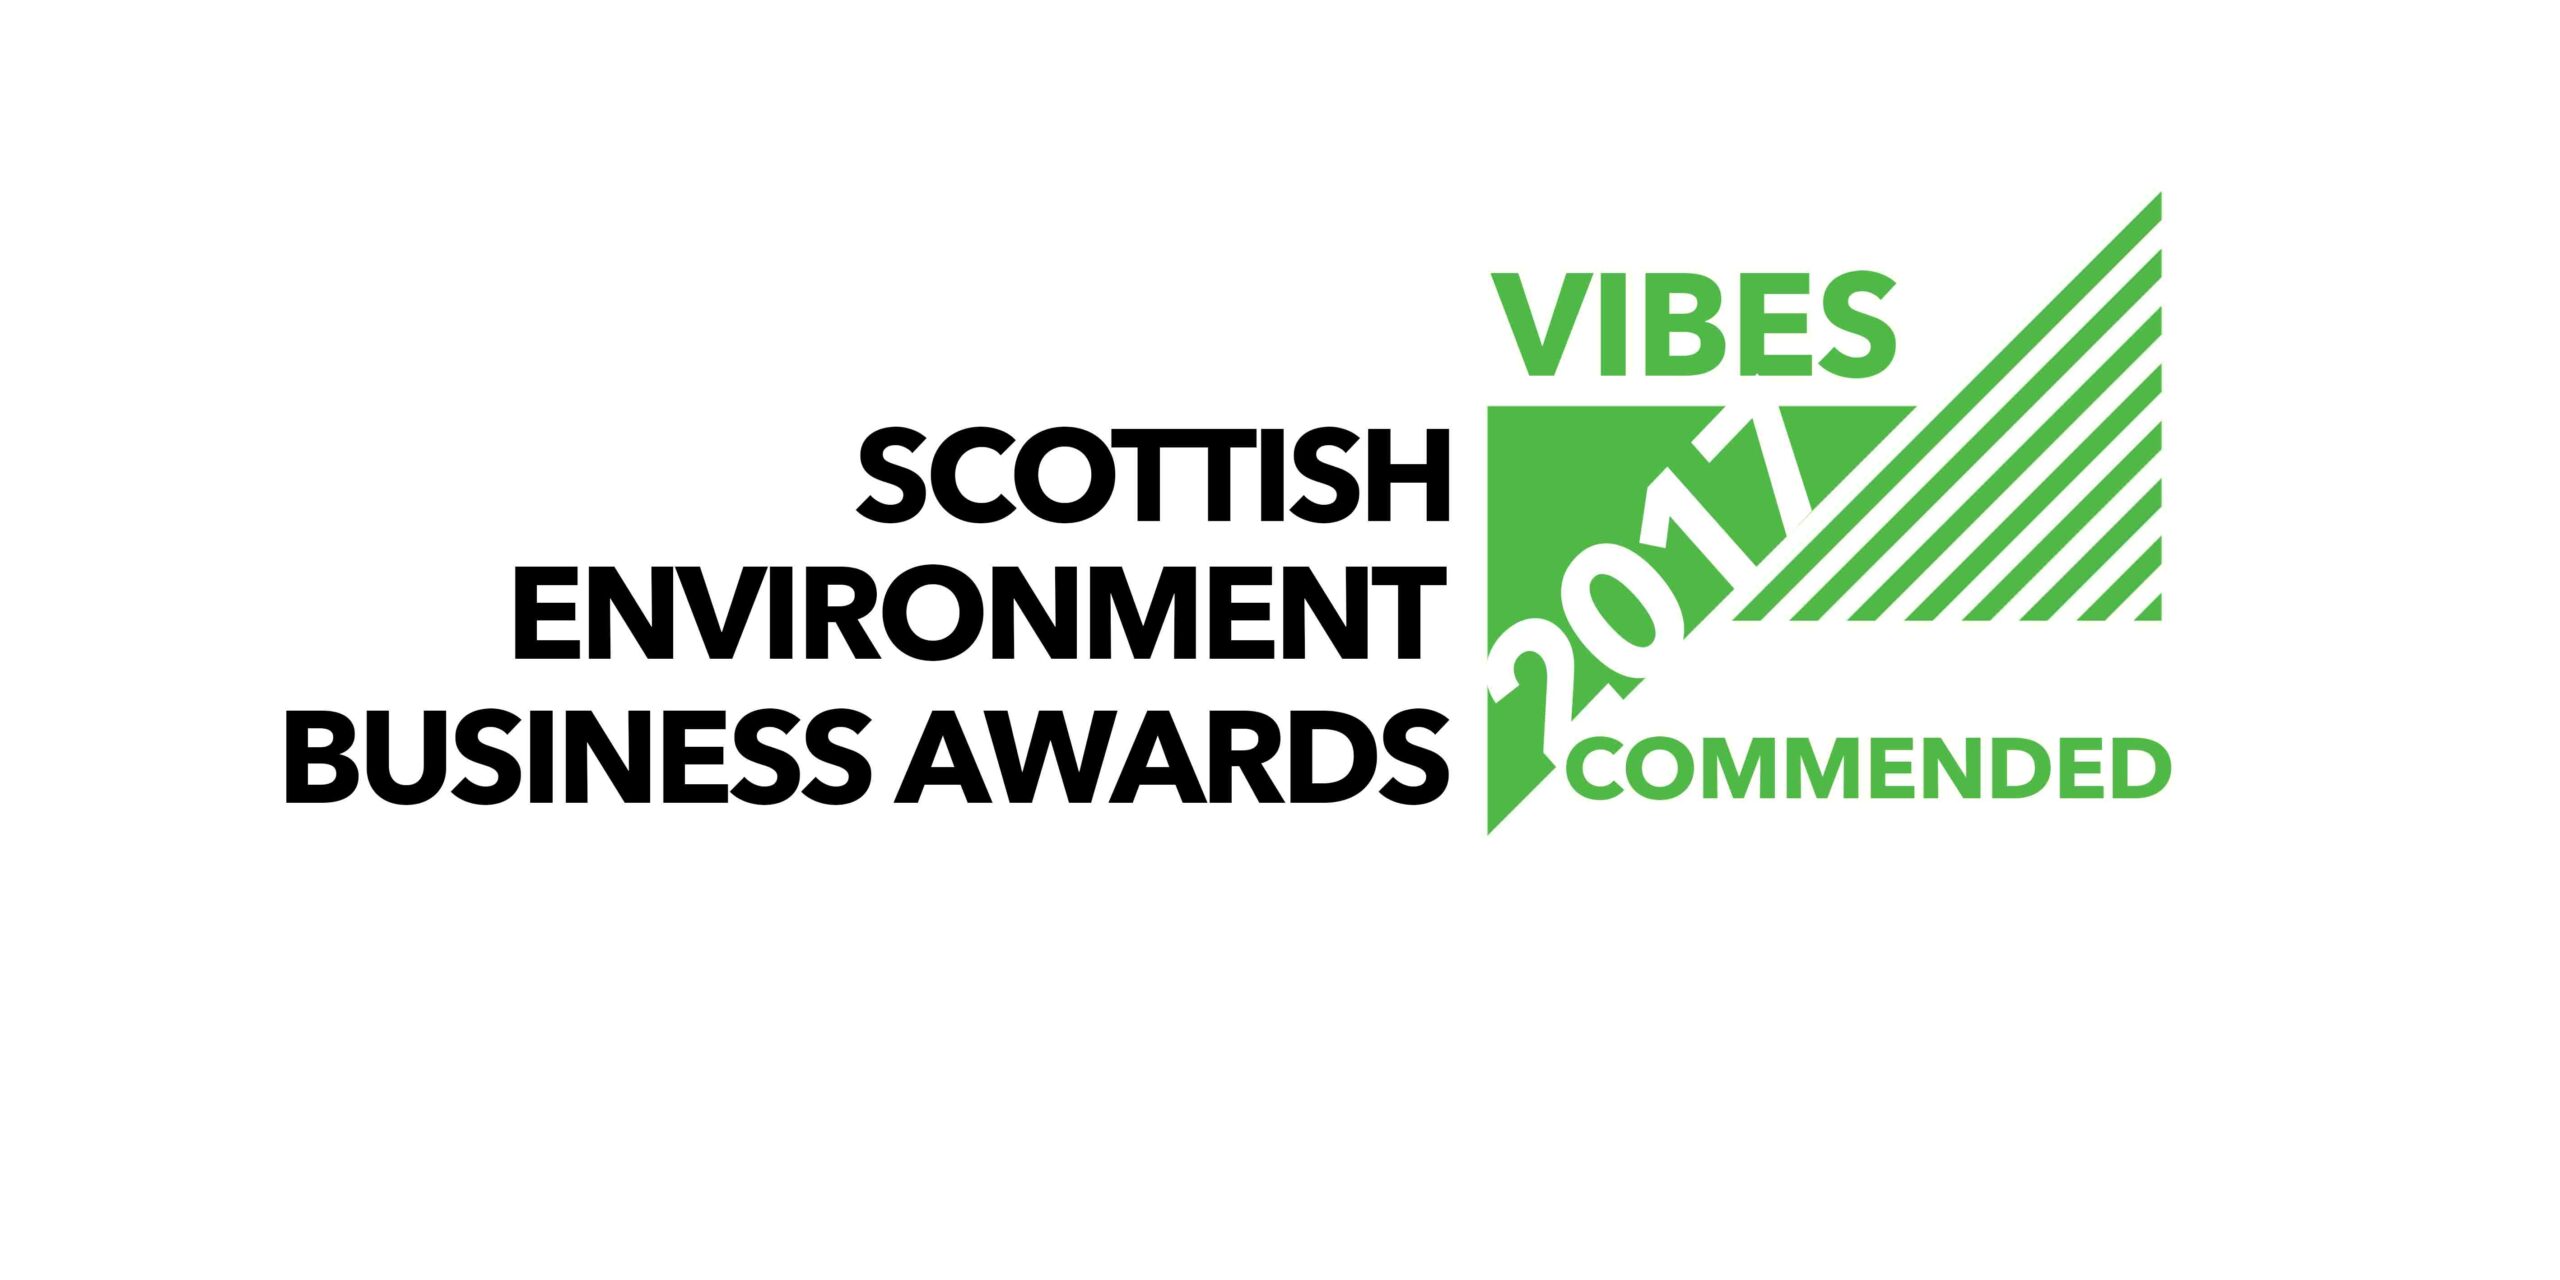 Vibes Awards - The Scottish Cafe & Restaurant | Contini